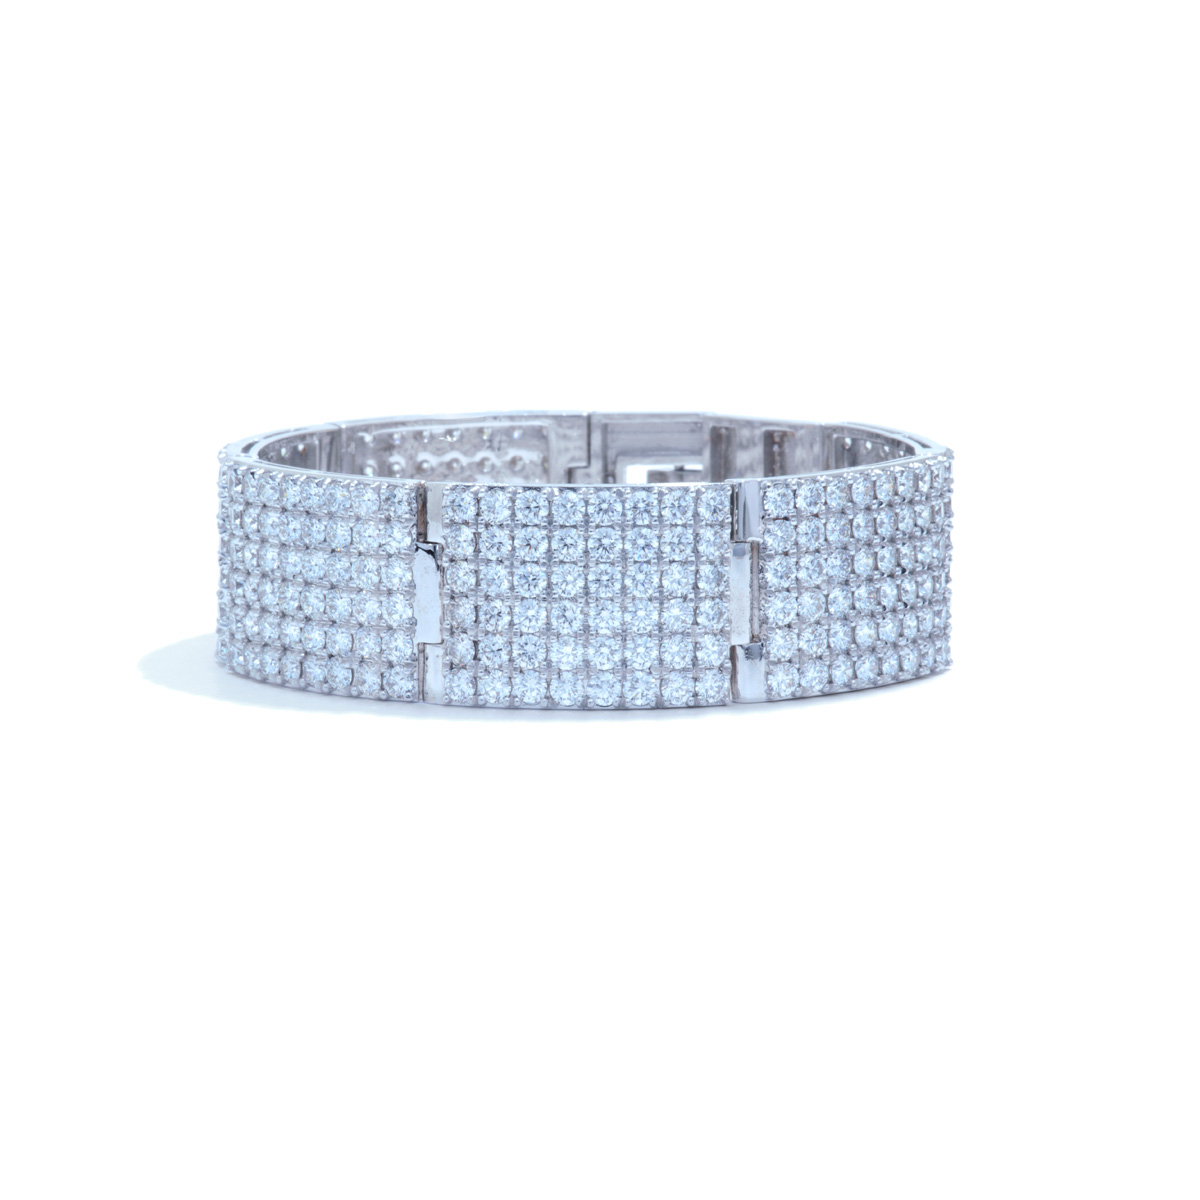 8 Carat Round Cut Diamond Tennis Bracelet | deBebians